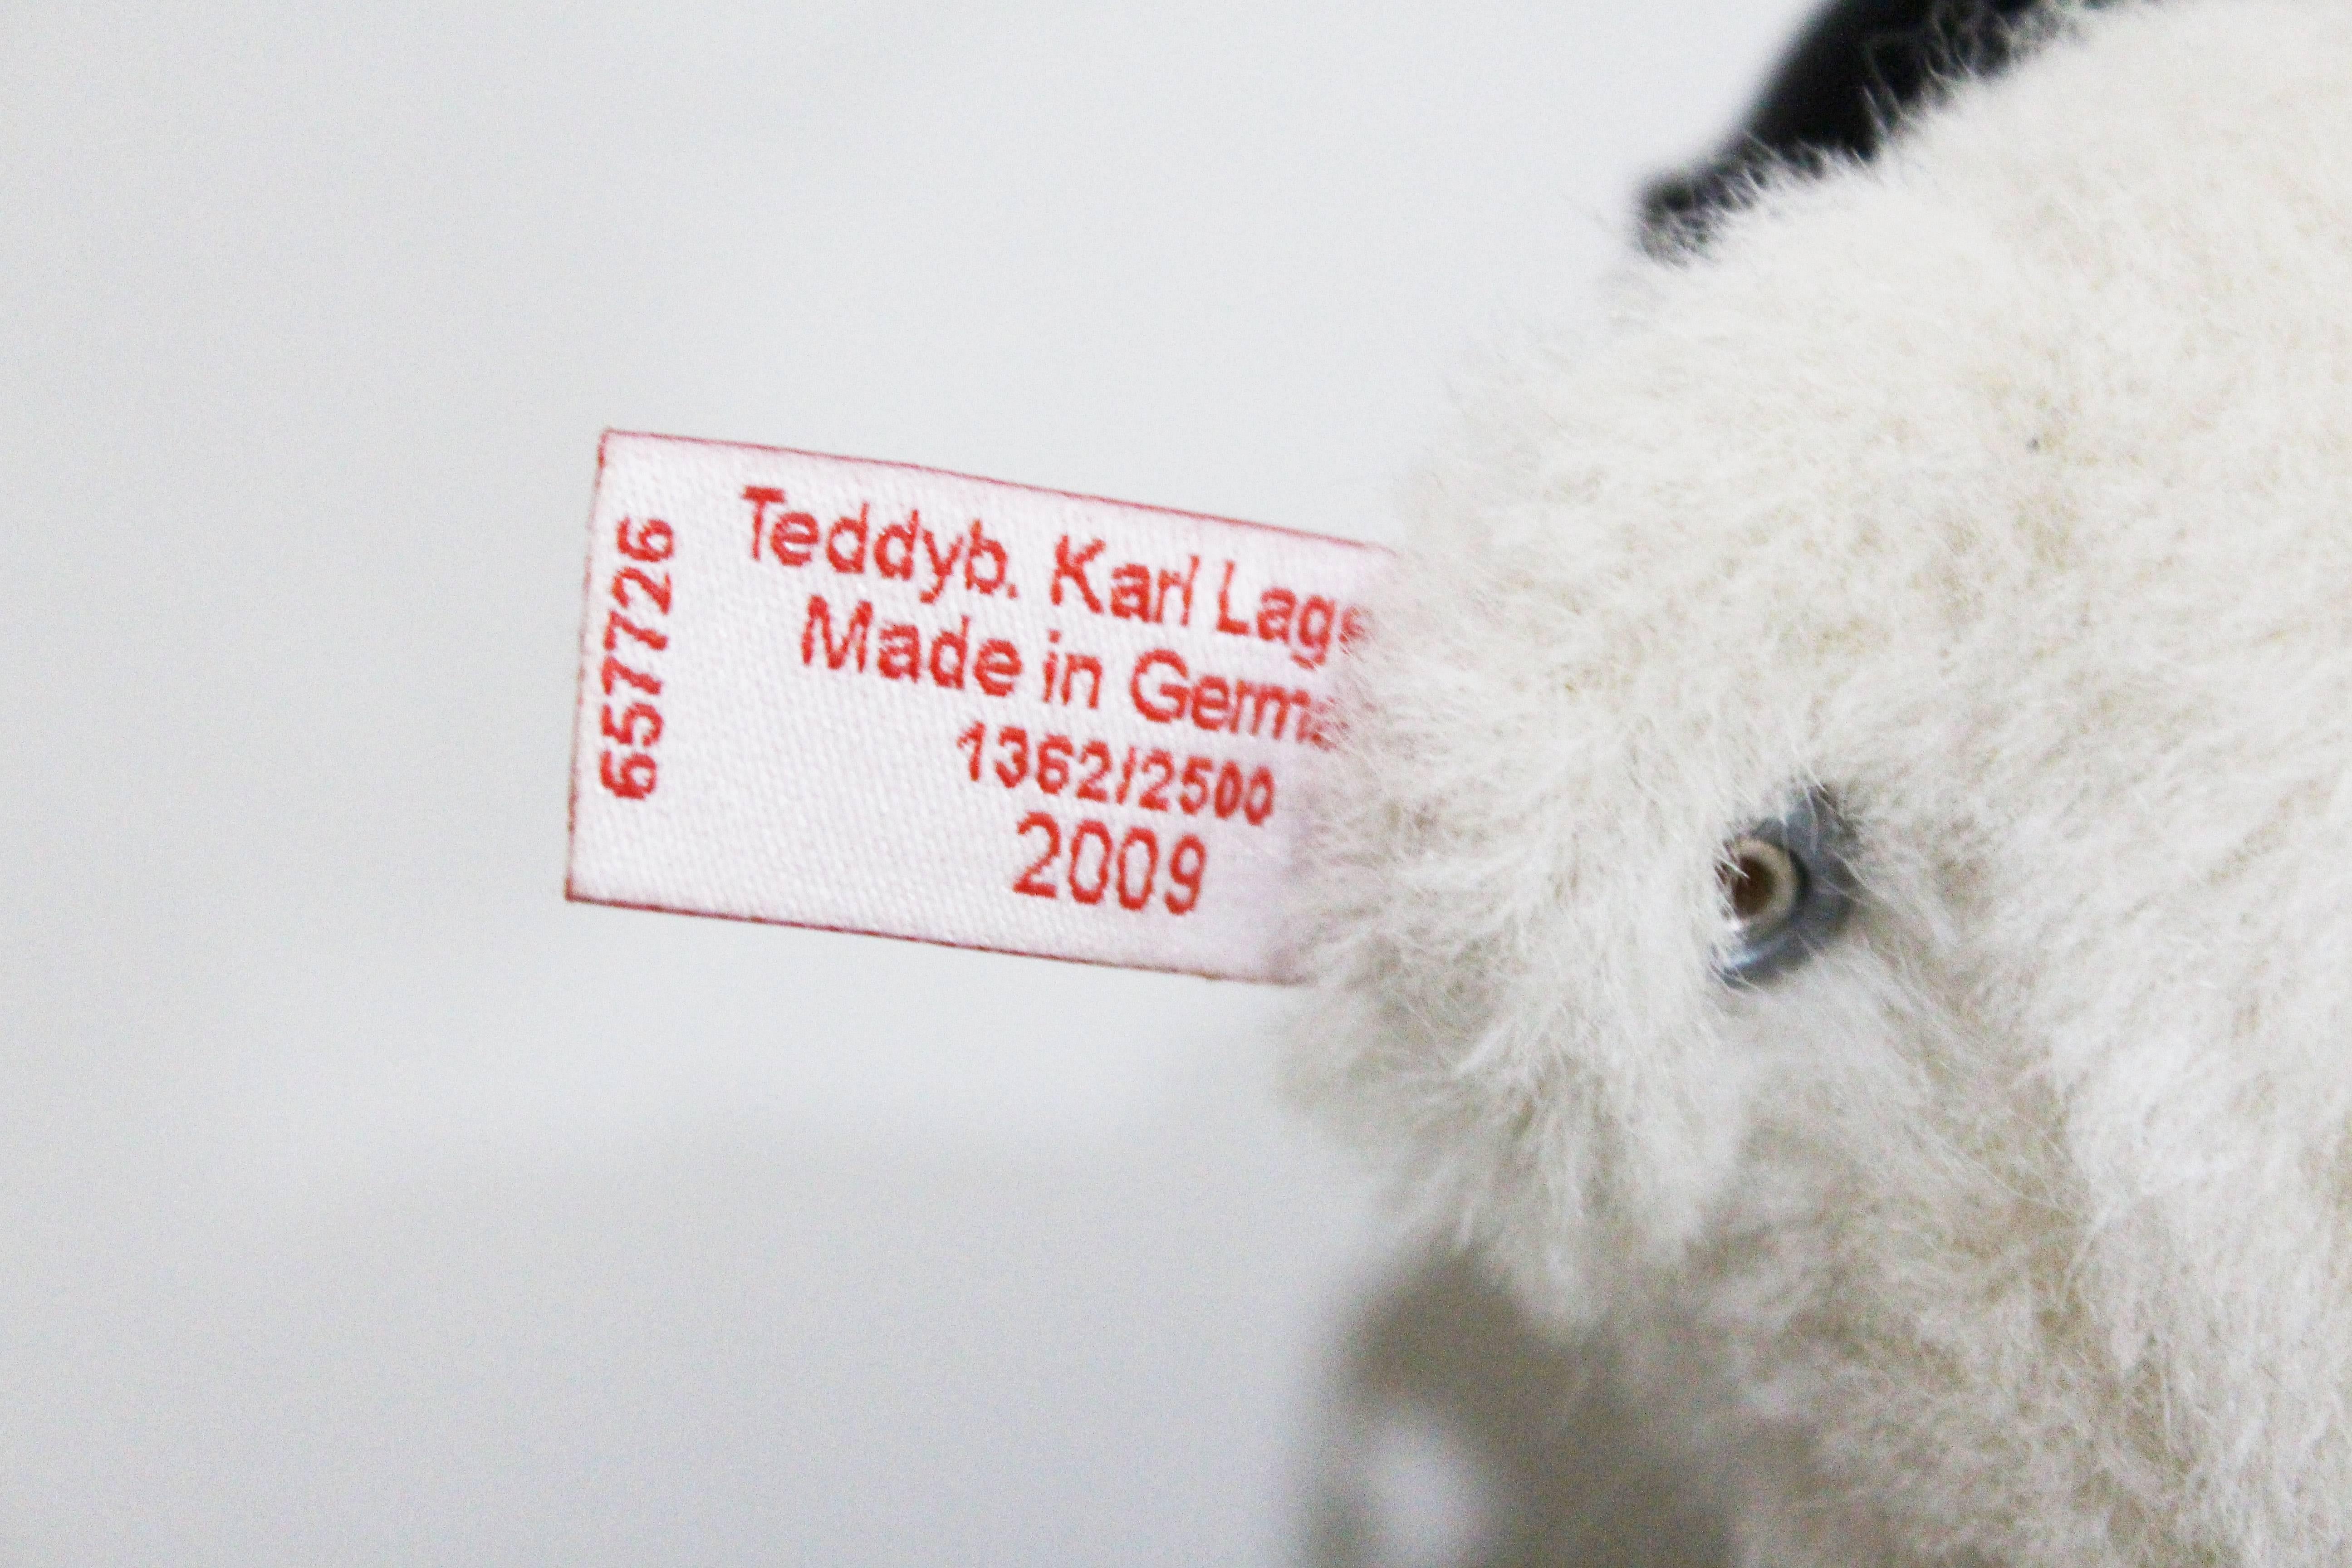 Black Collectors Limited Edition Steiff Karl Lagerfeld Teddy Bear c. 2009